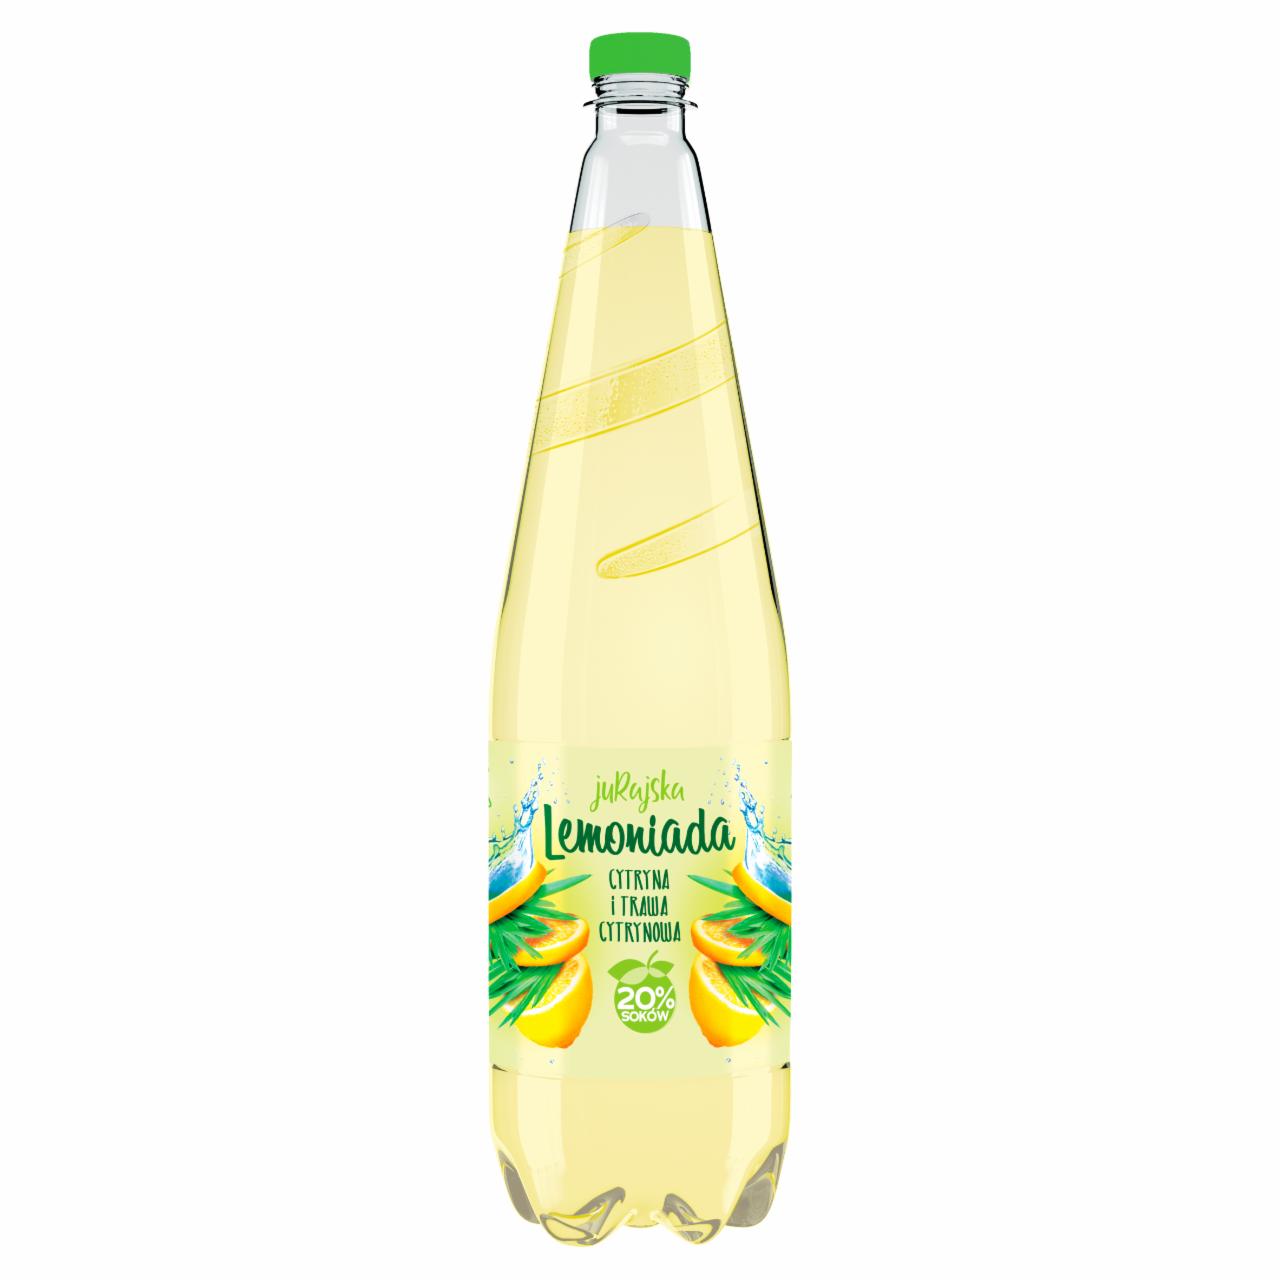 Zdjęcia - Jurajska Lemoniada smak cytryna i trawa cytrynowa 1,25 l